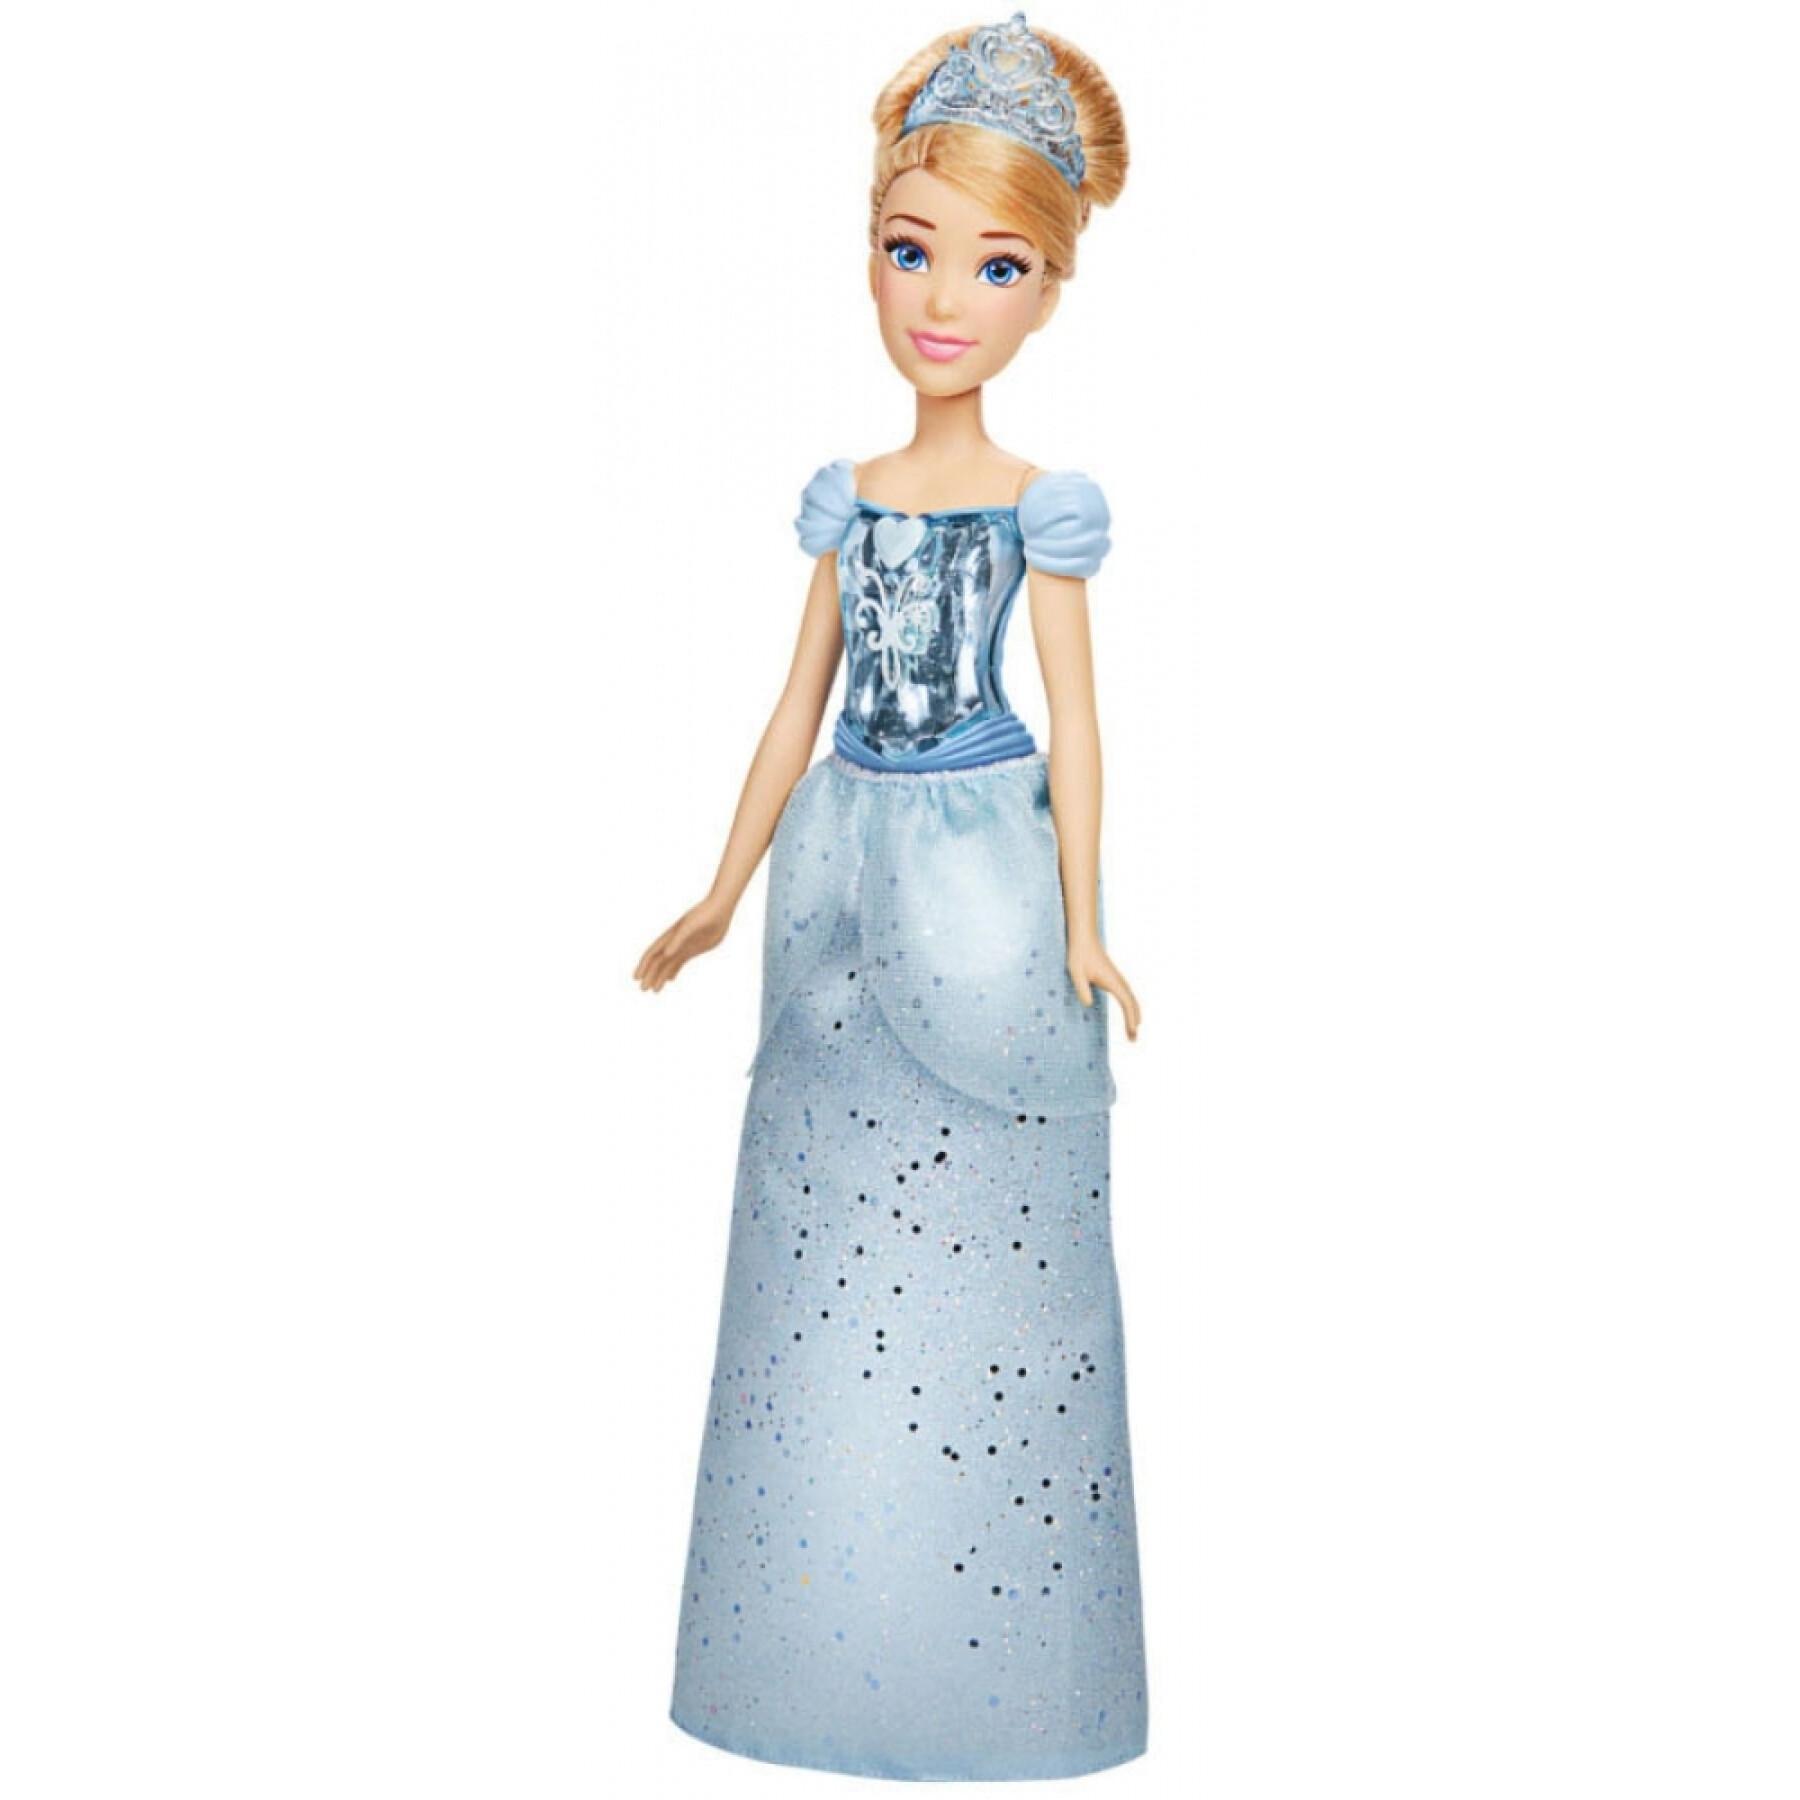 Doll 3 modeller Disney Princess 30 cm